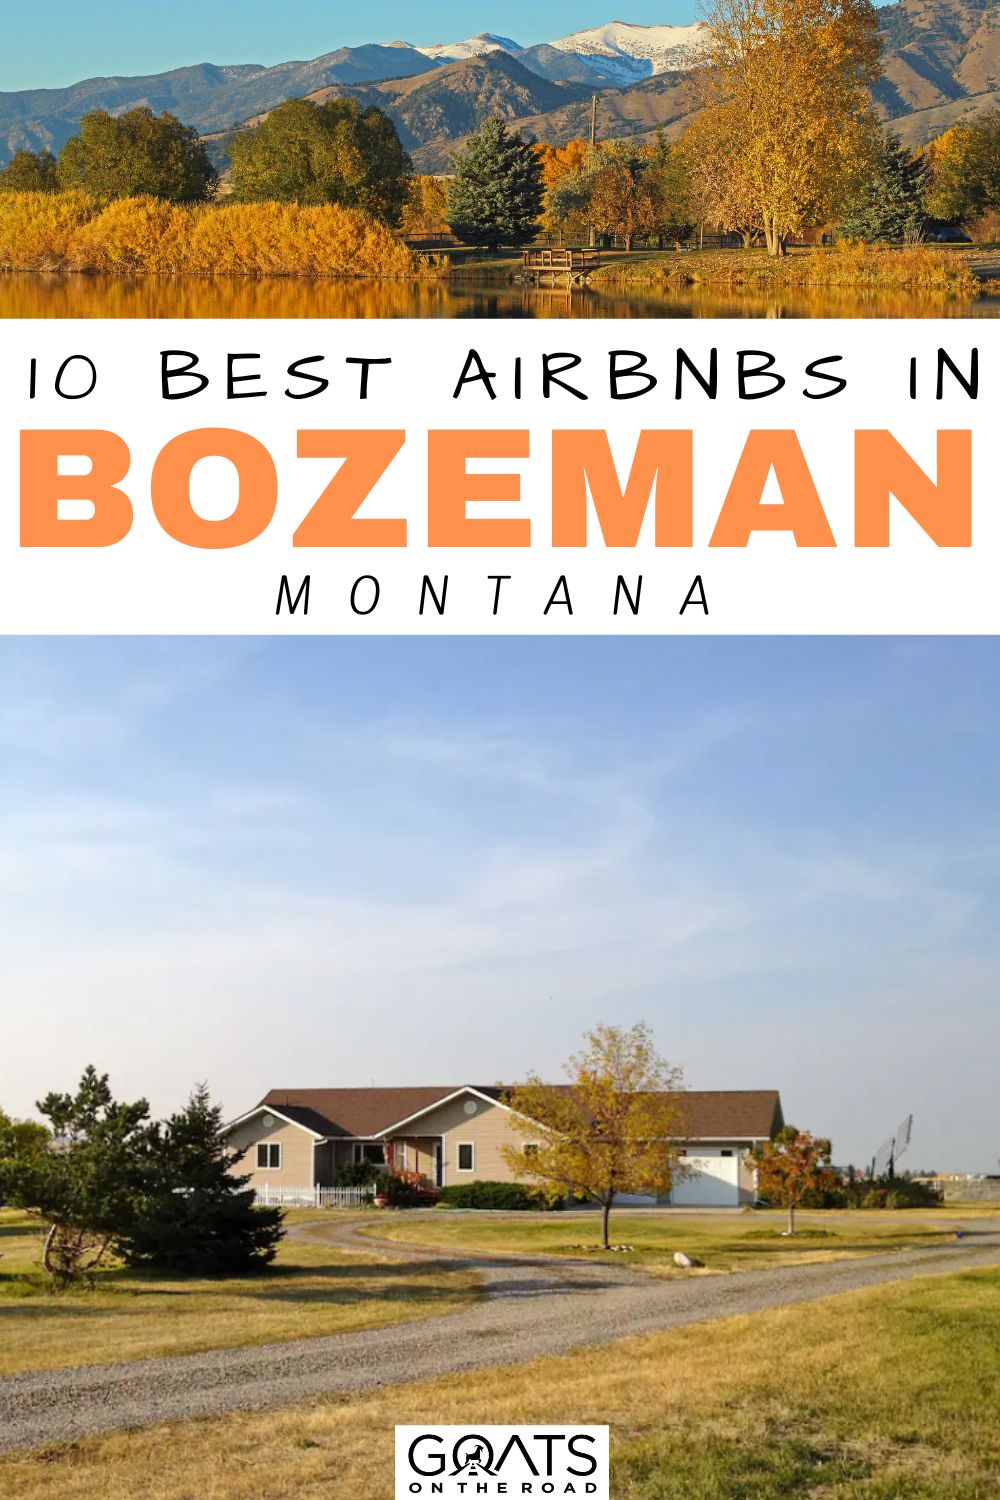 “10 Best Airbnbs in Bozeman, Montana